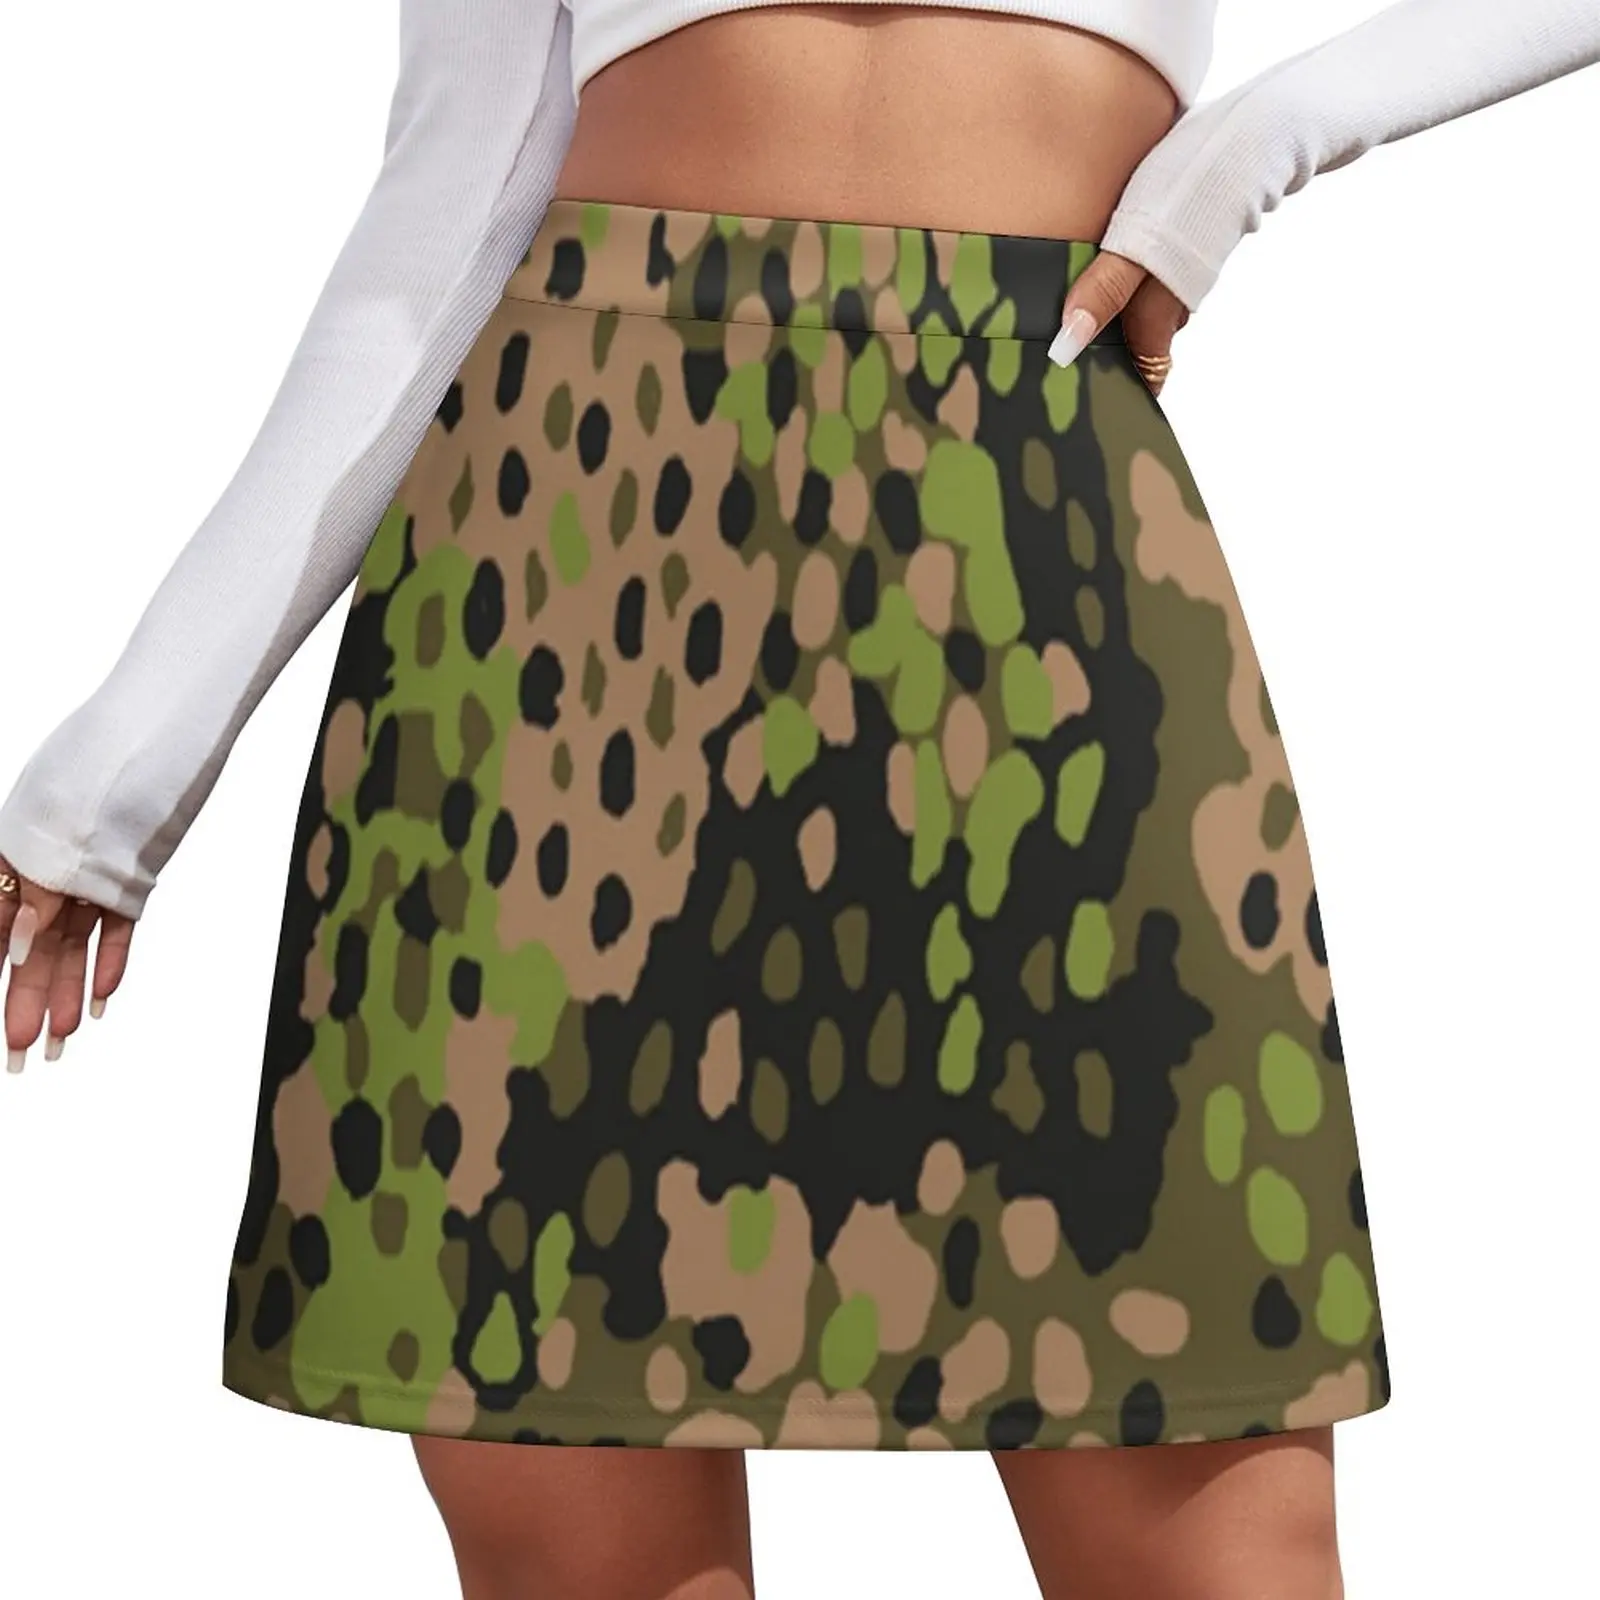 WW2 SS Erbsentarn camo Mini Skirt sexy short mini skirts new in dresses modest skirts for women summer clothes